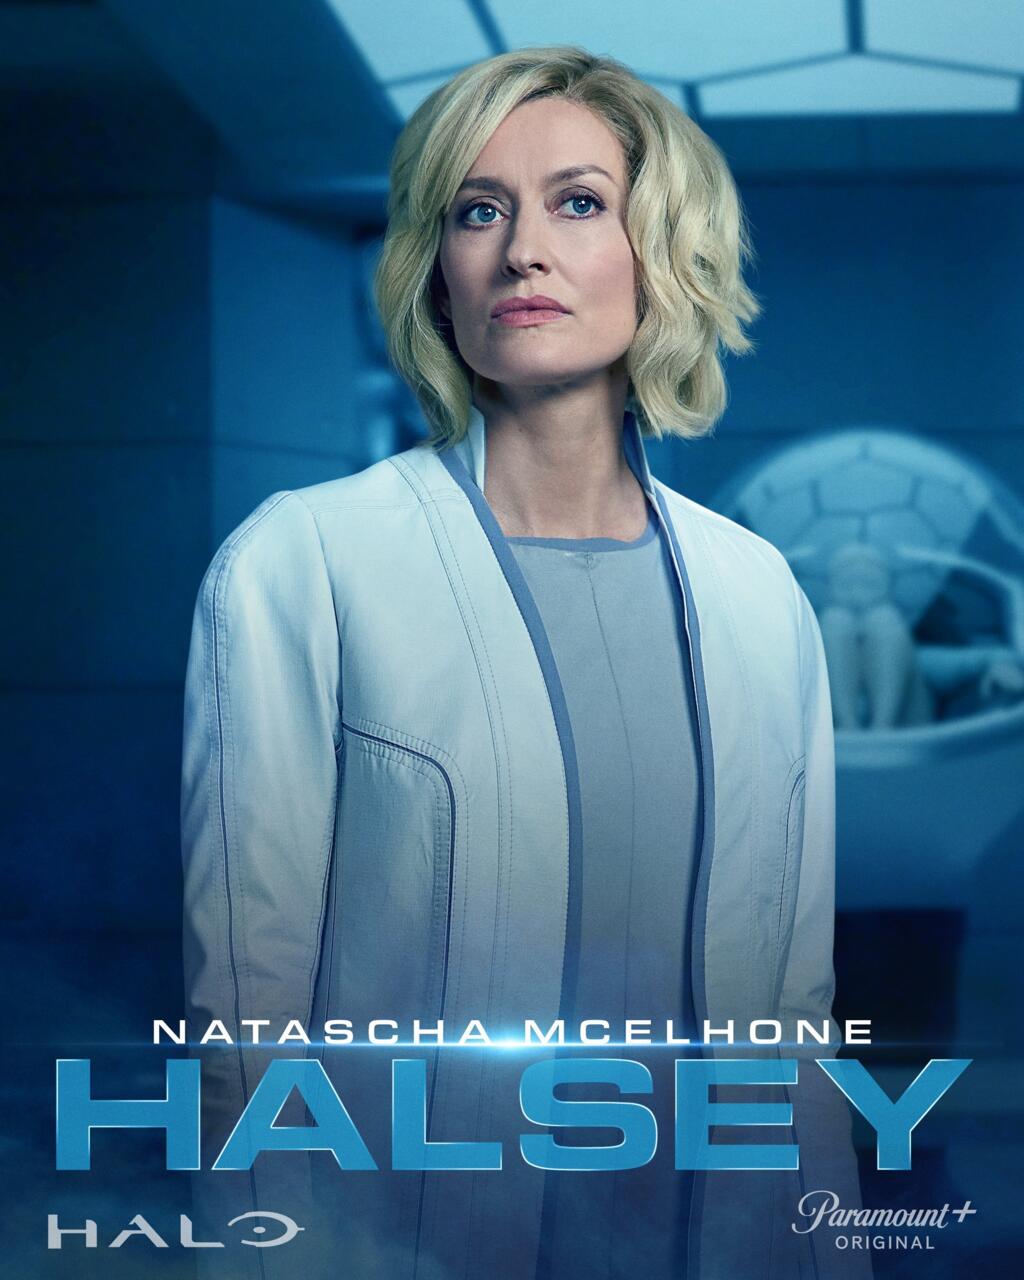 Halo Poster Reveals Fresh Look at Upcoming TV Series & Upcoming